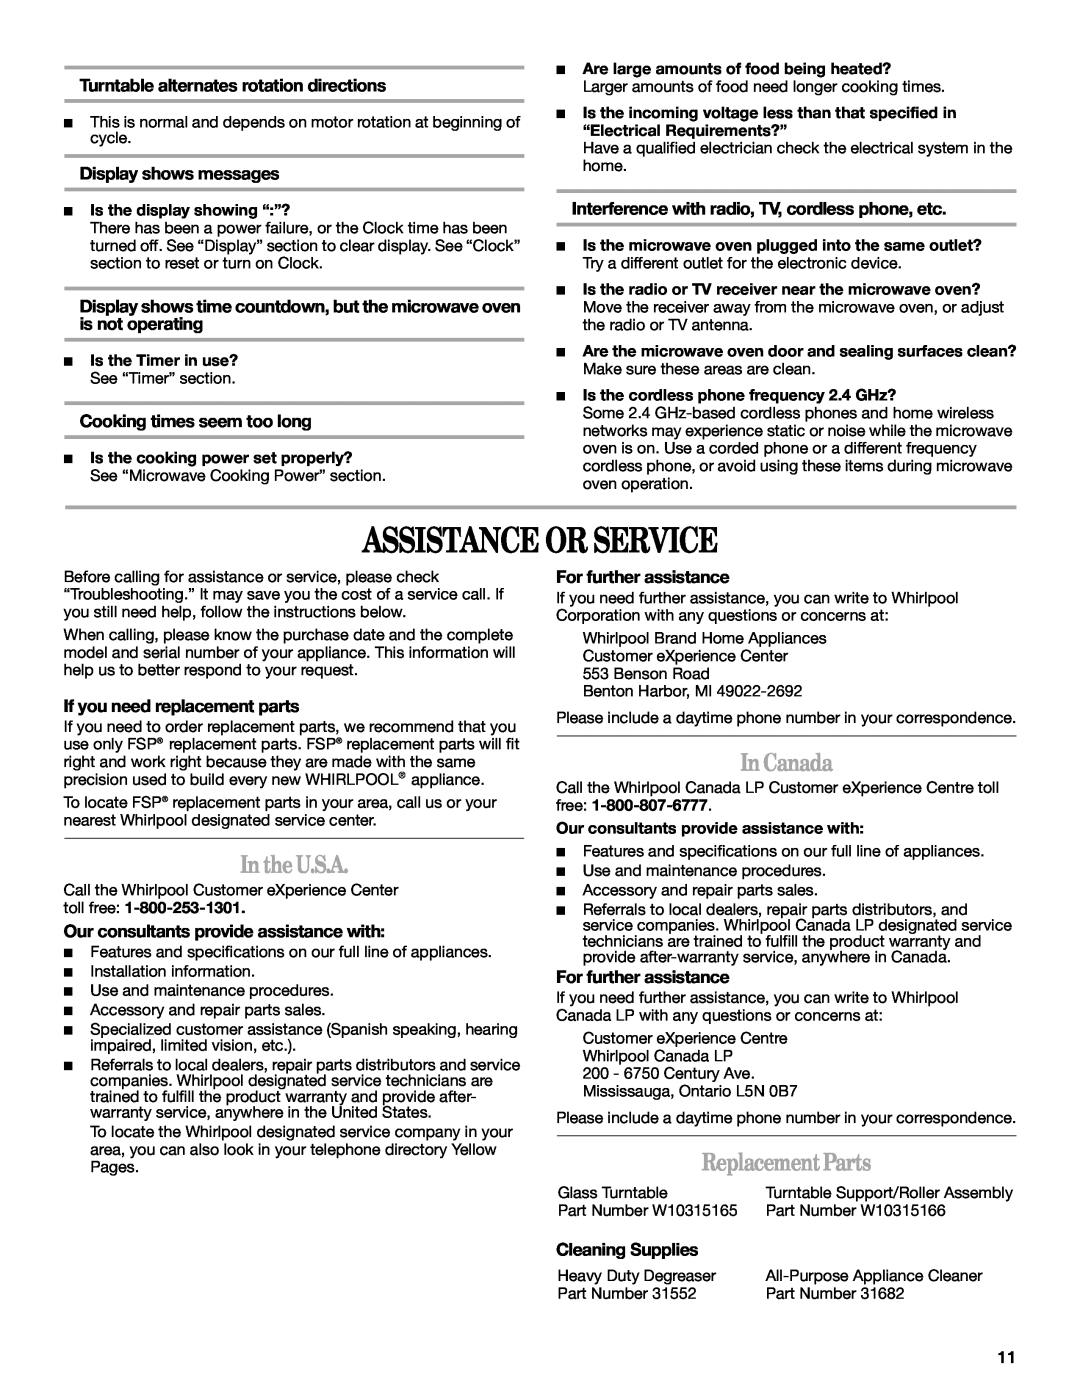 Whirlpool WMC1070 manual Assistance Or Service, IntheU.S.A, InCanada, ReplacementParts 